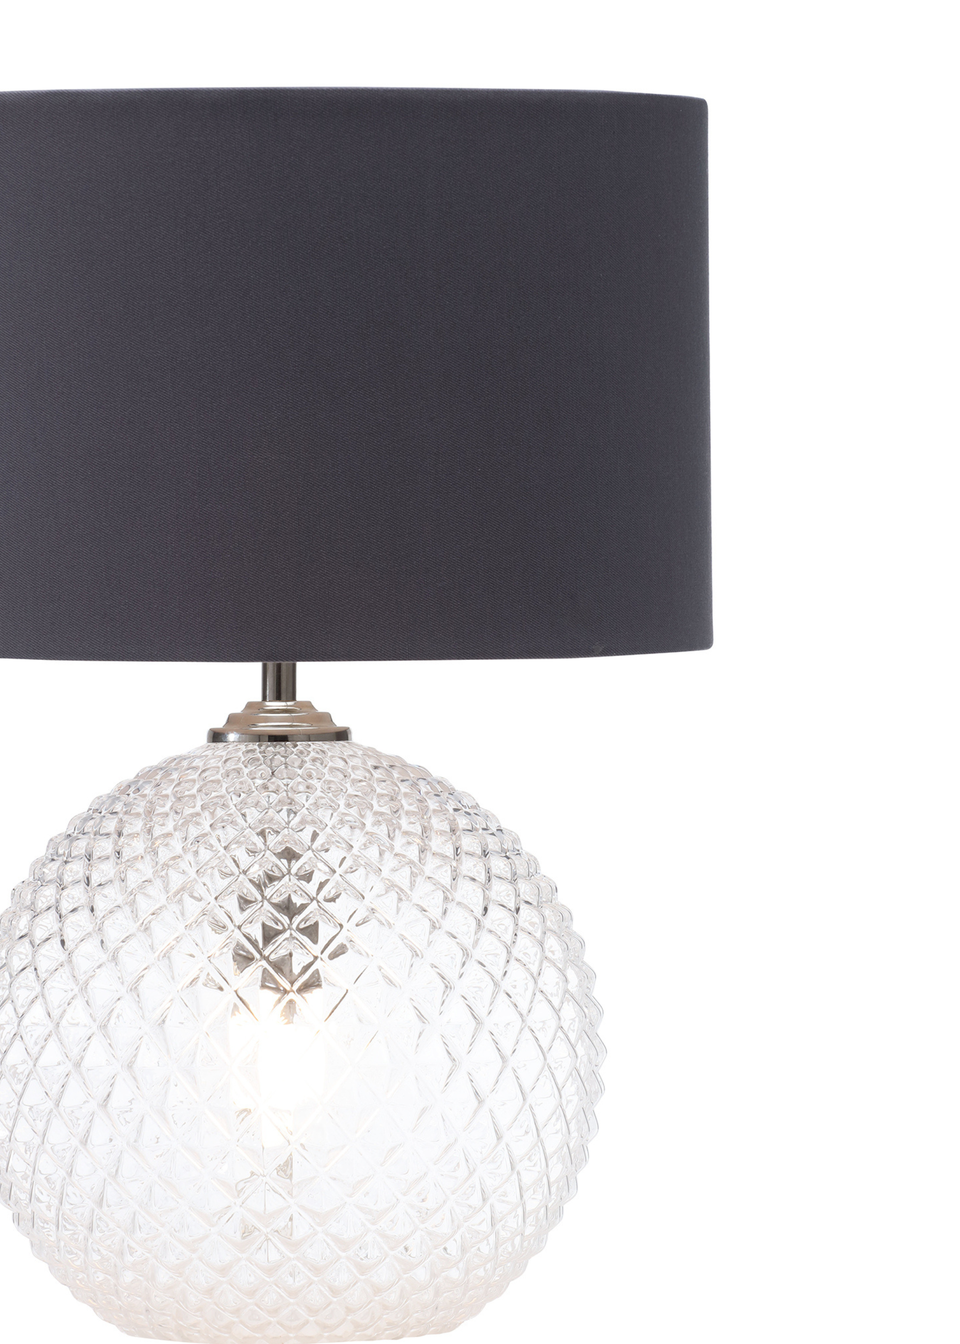 Inlight Textured Light-Up Base Table Lamp (47cm x 33cm)